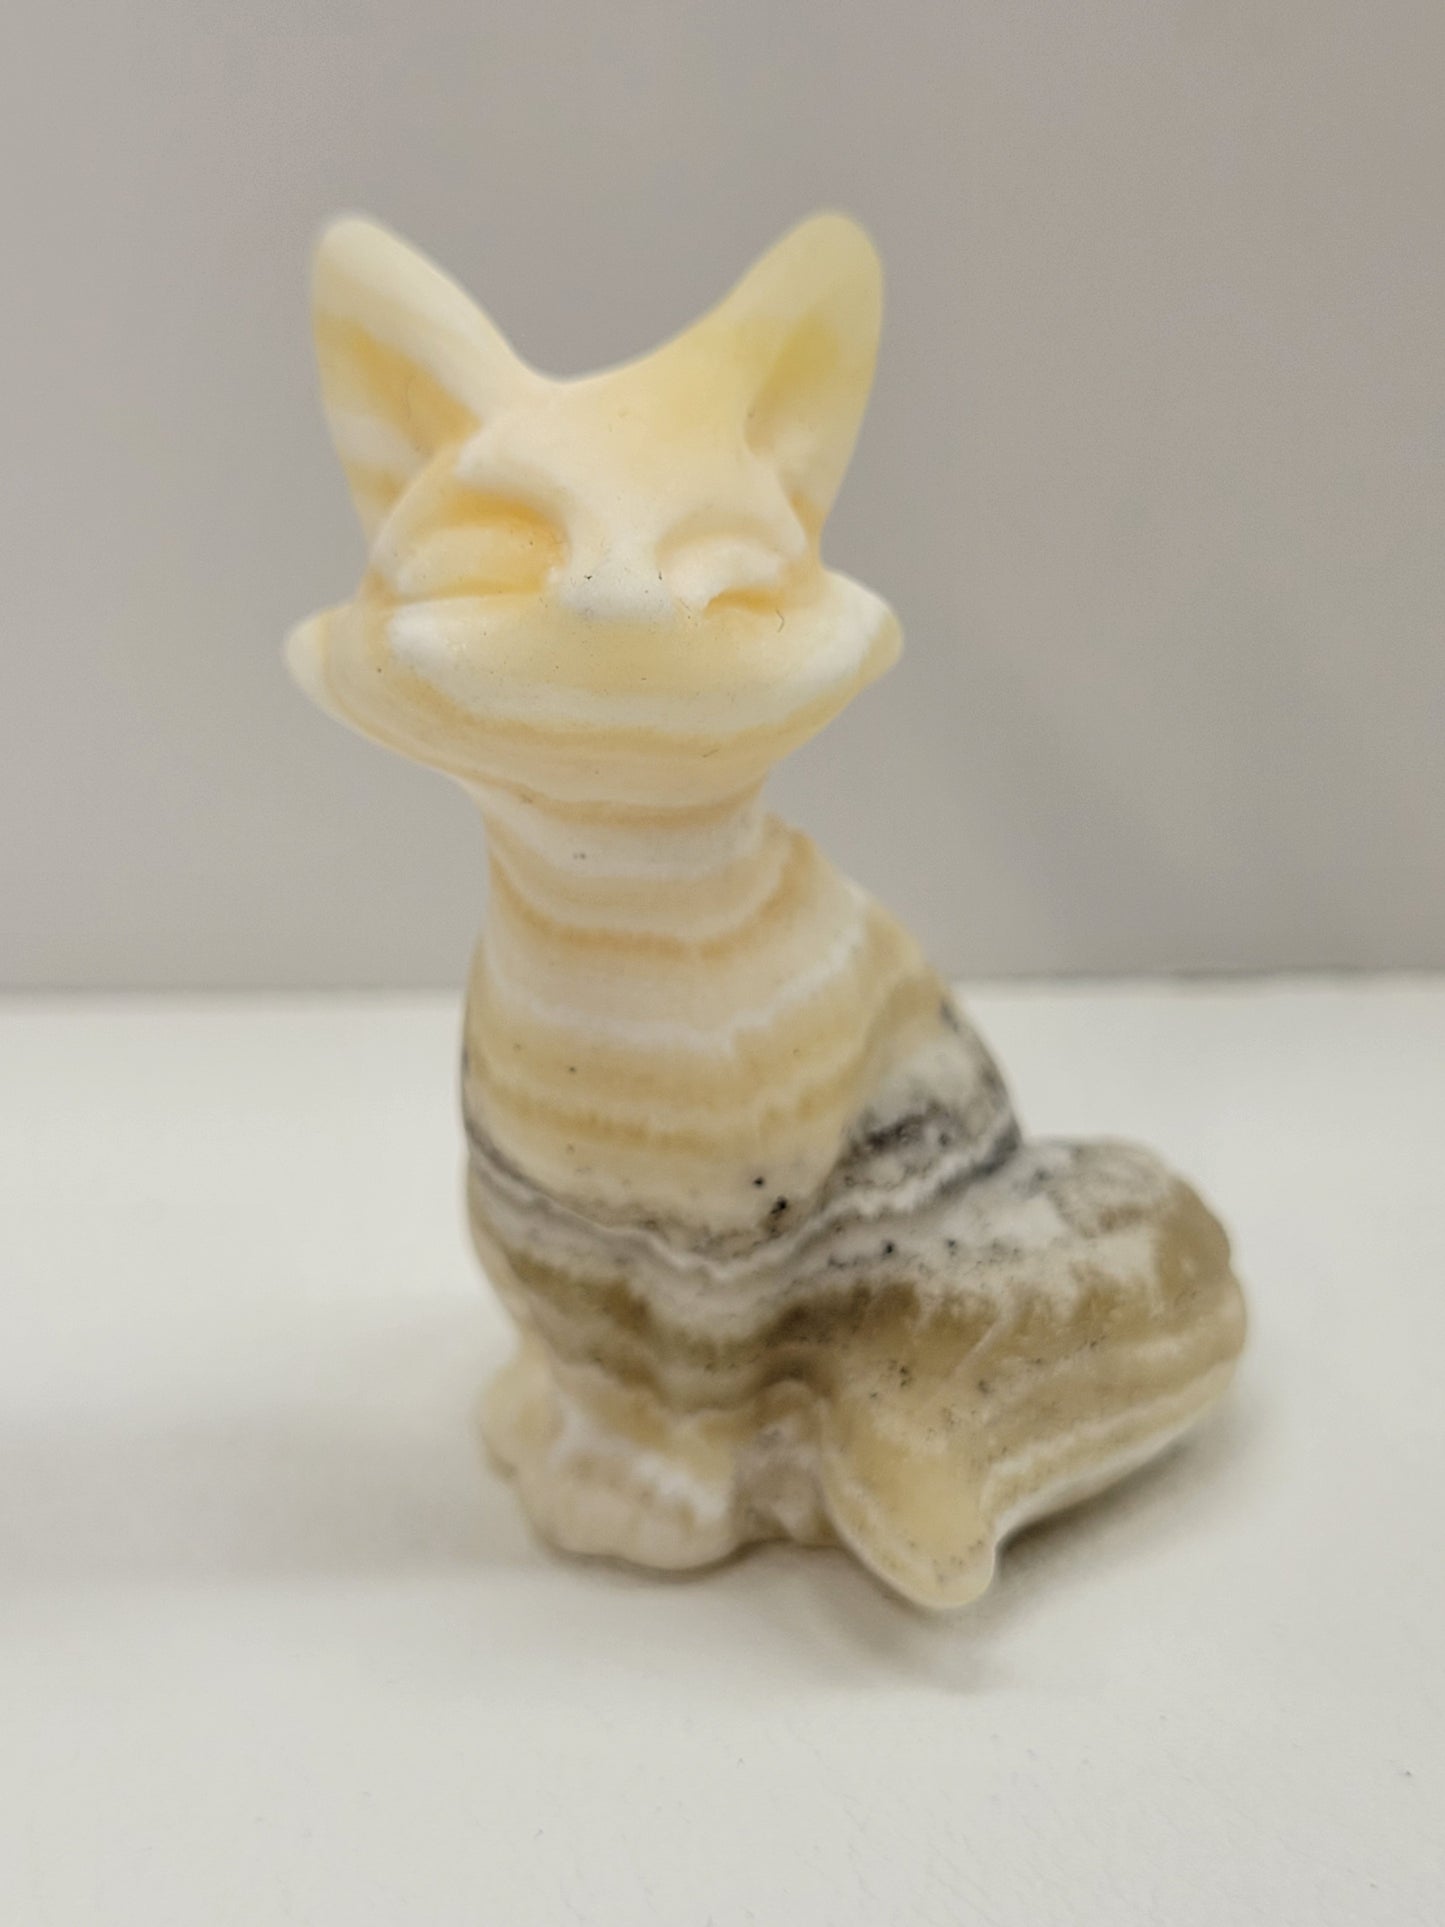 Fox carving